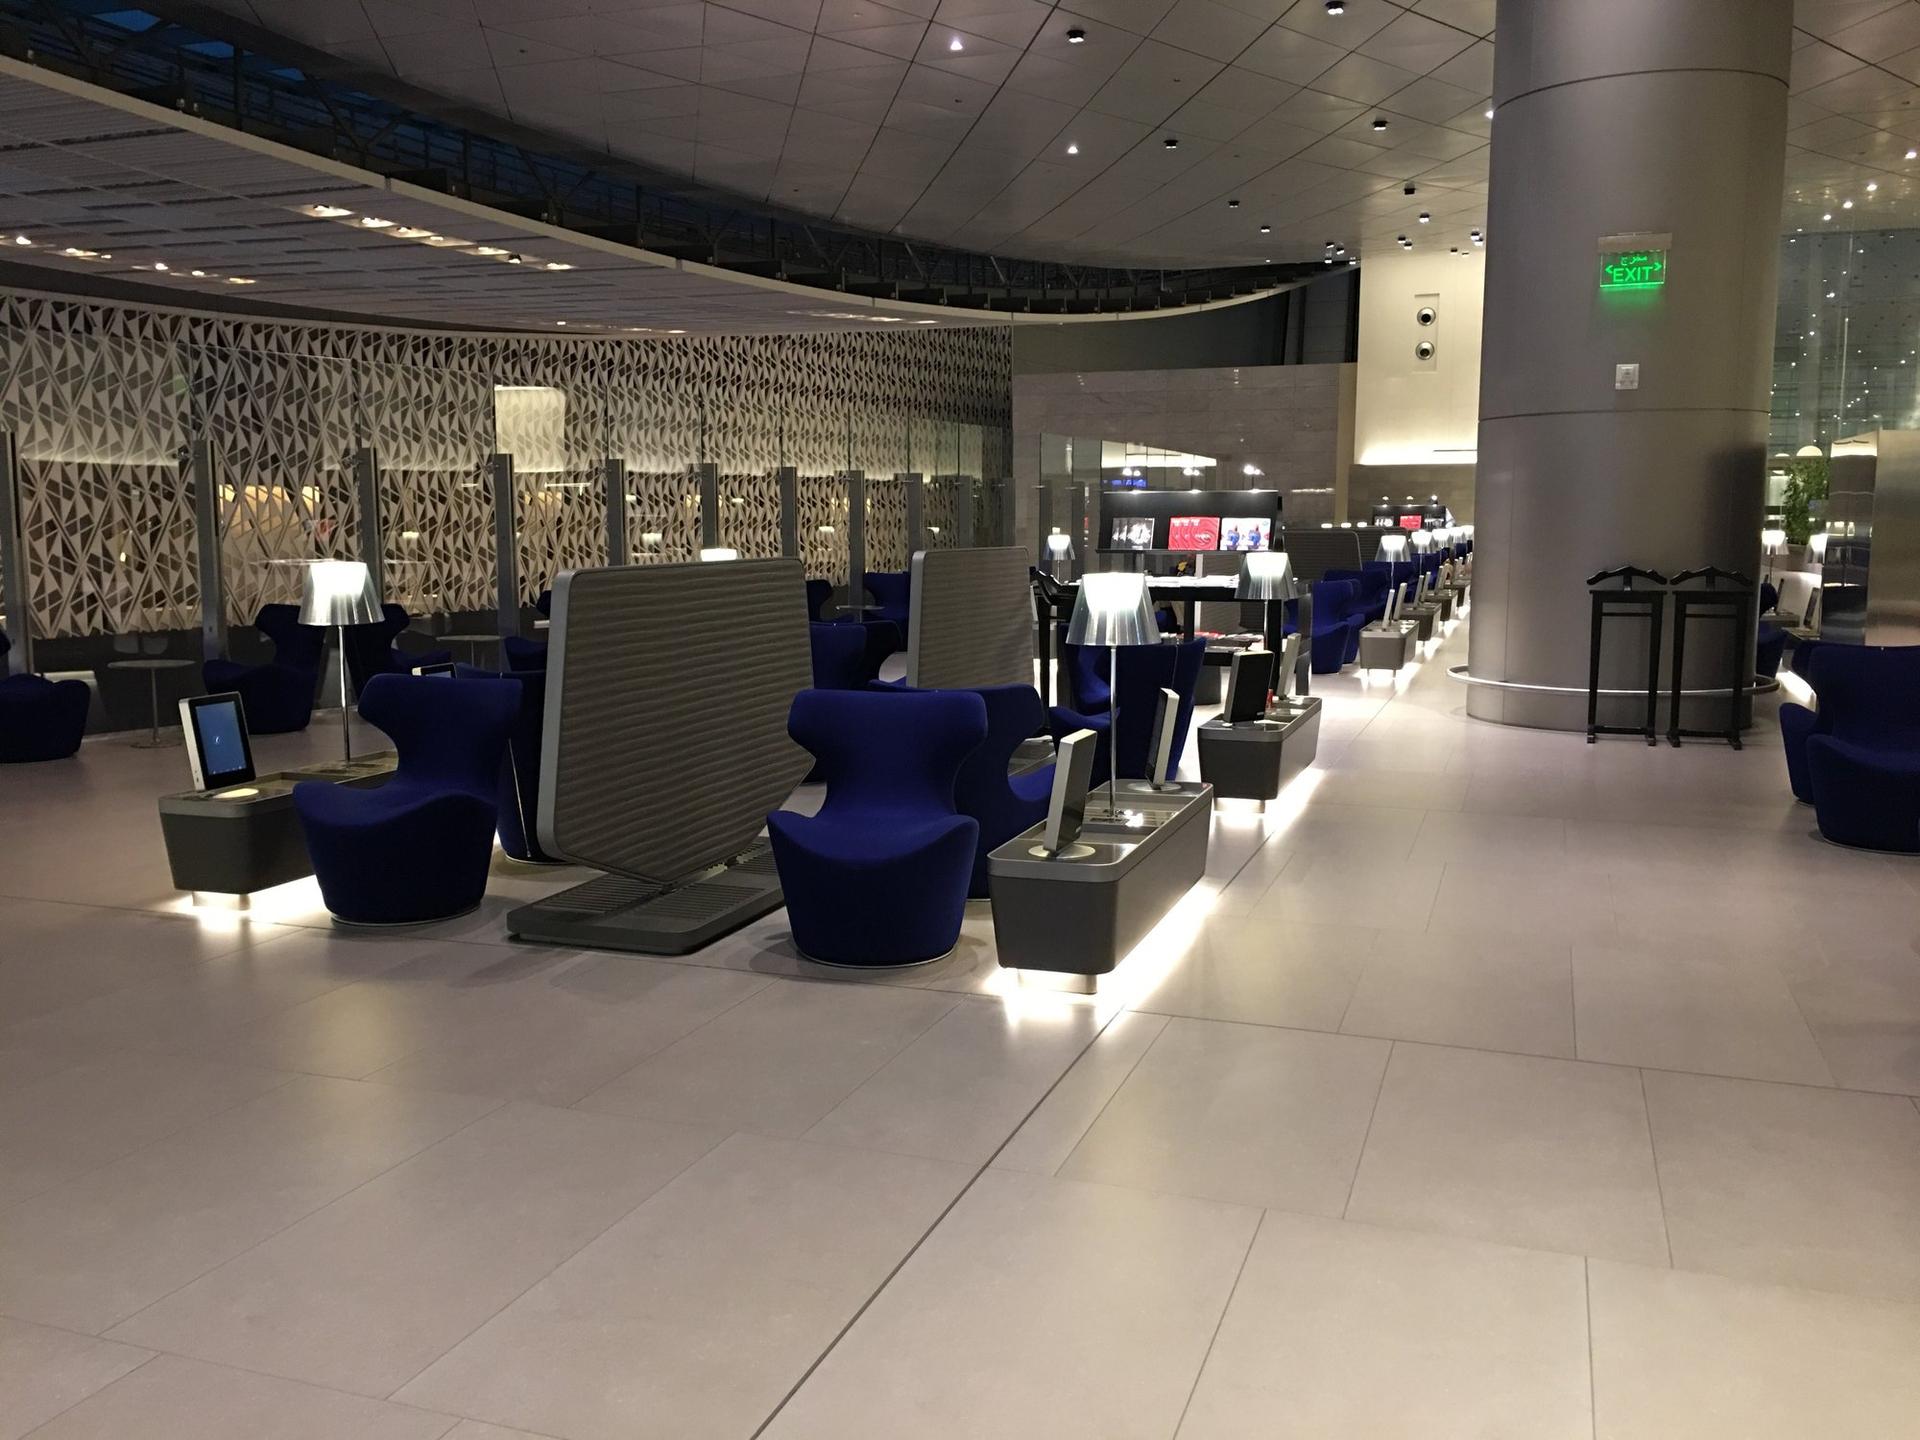 Qatar Airways Al Mourjan Business Class Lounge image 74 of 100